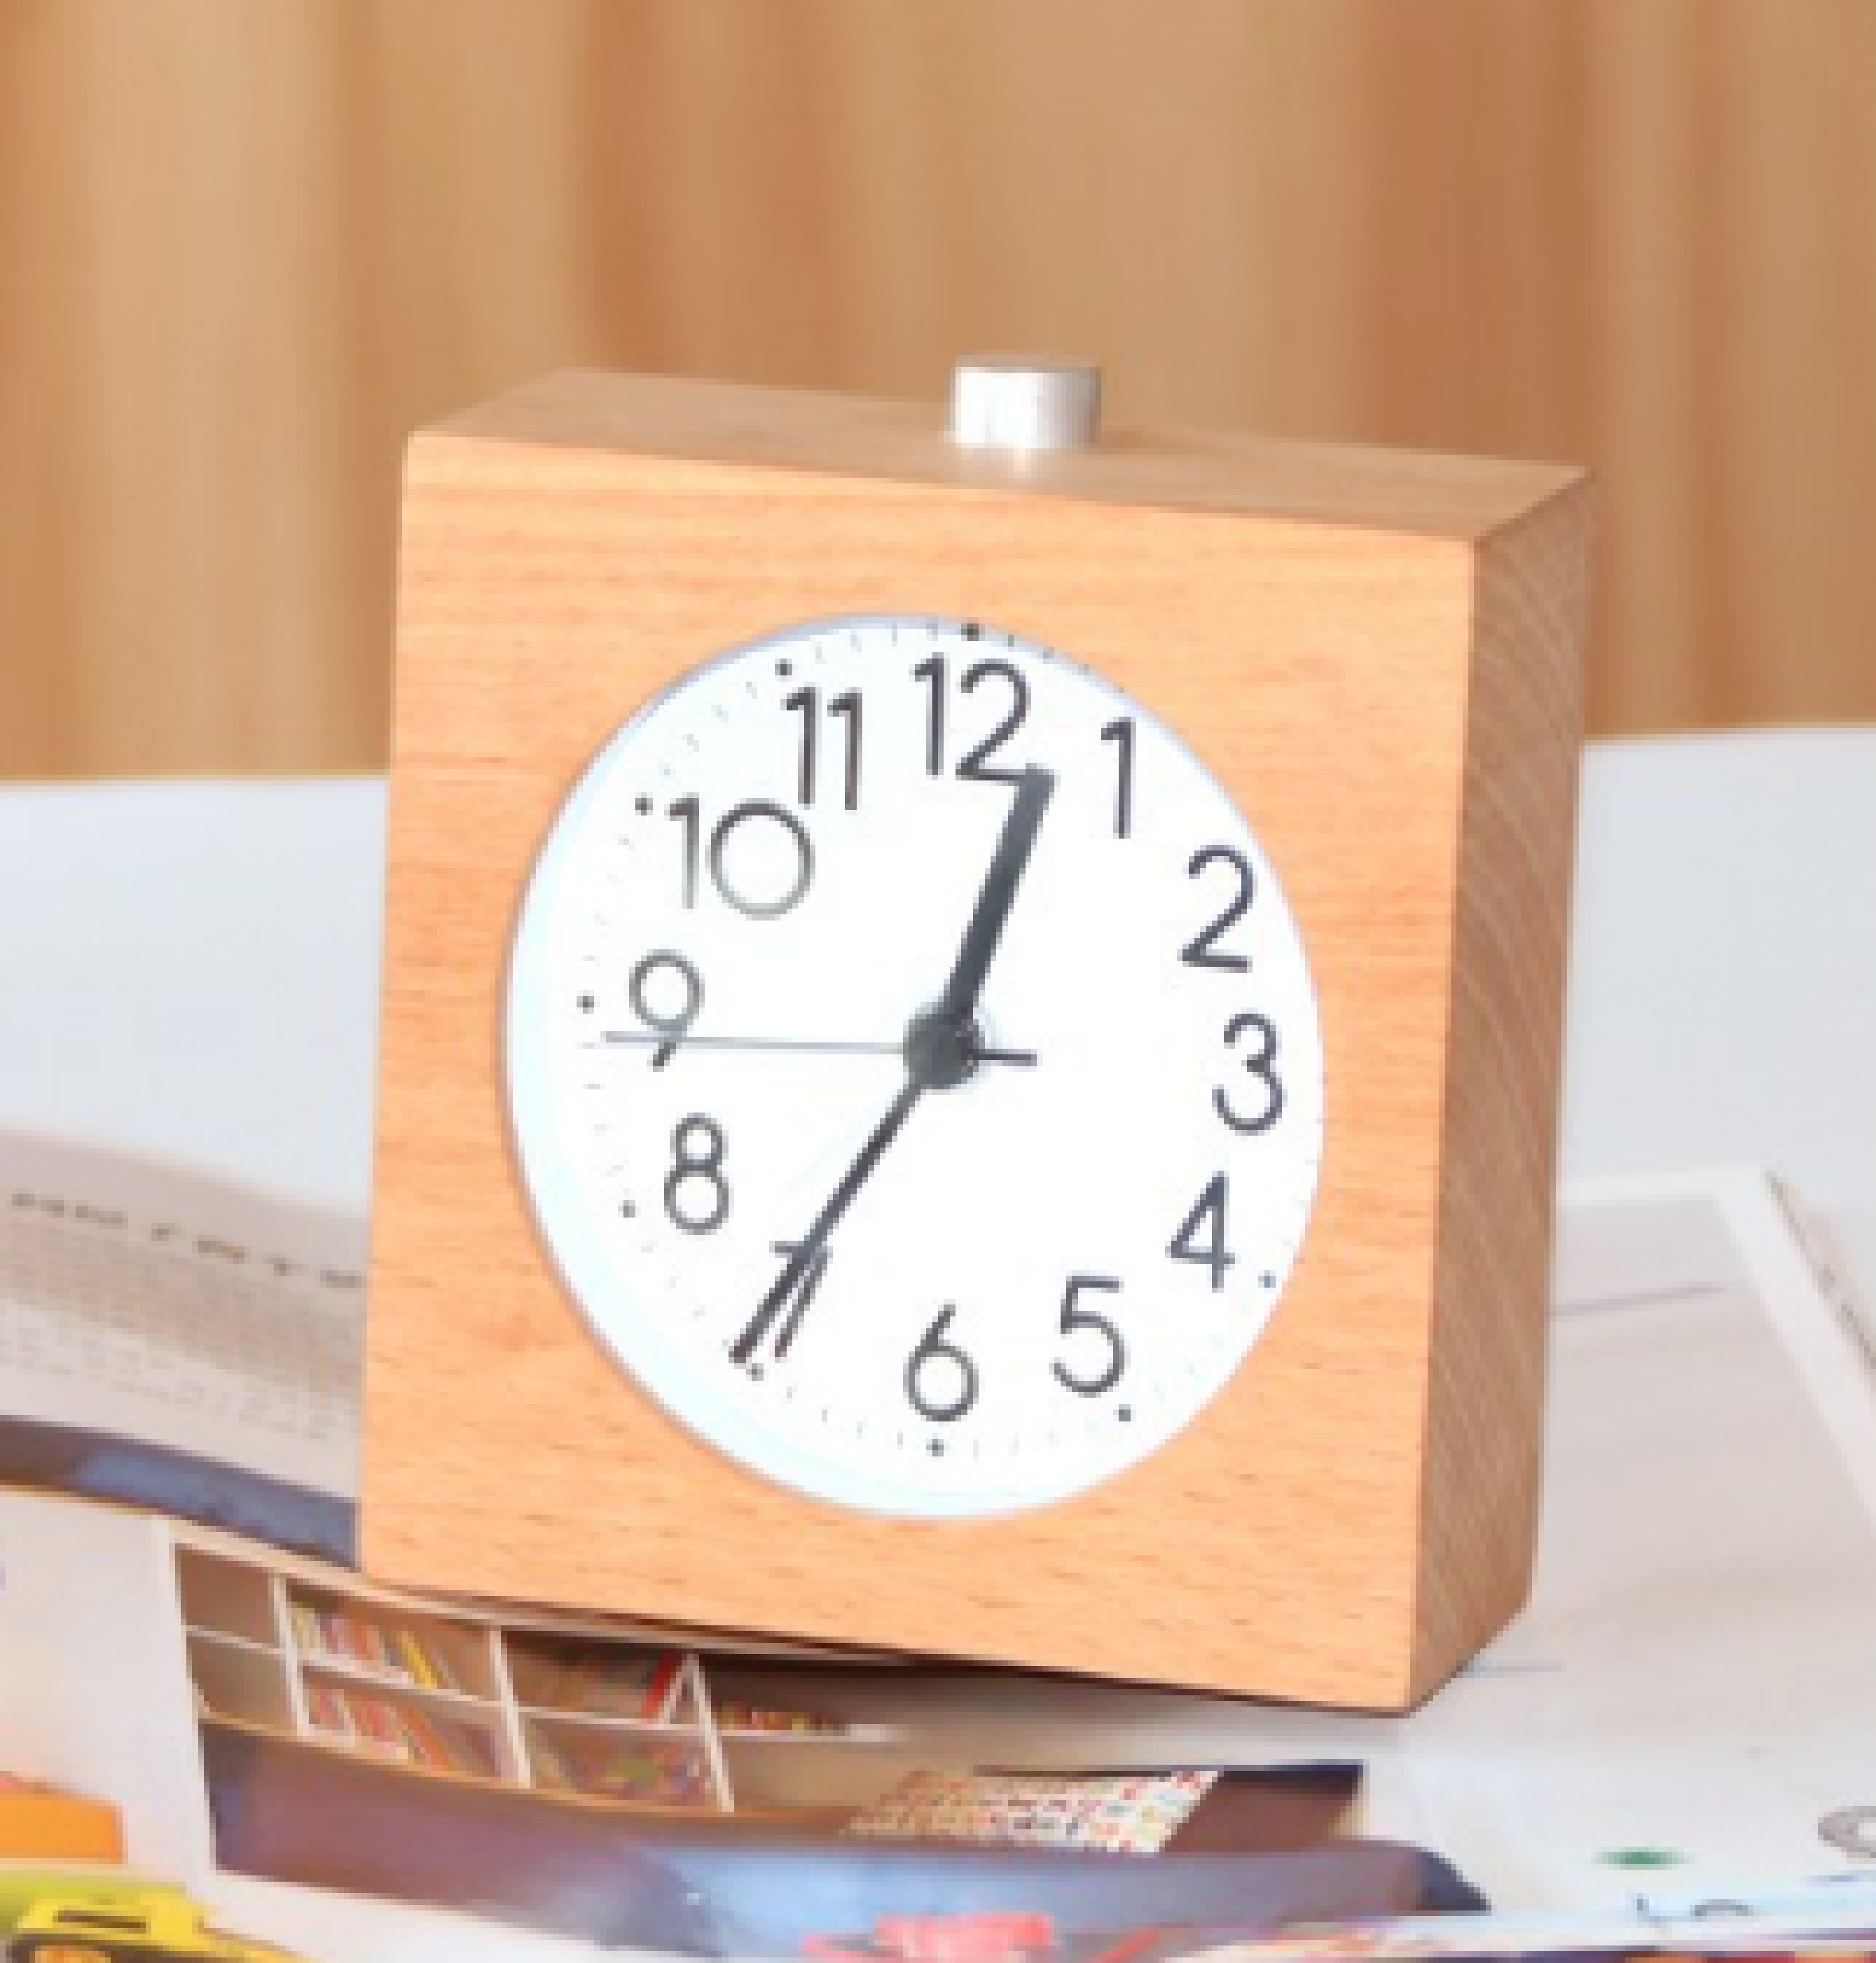 Solid wood clock, student's lazy alarm clock